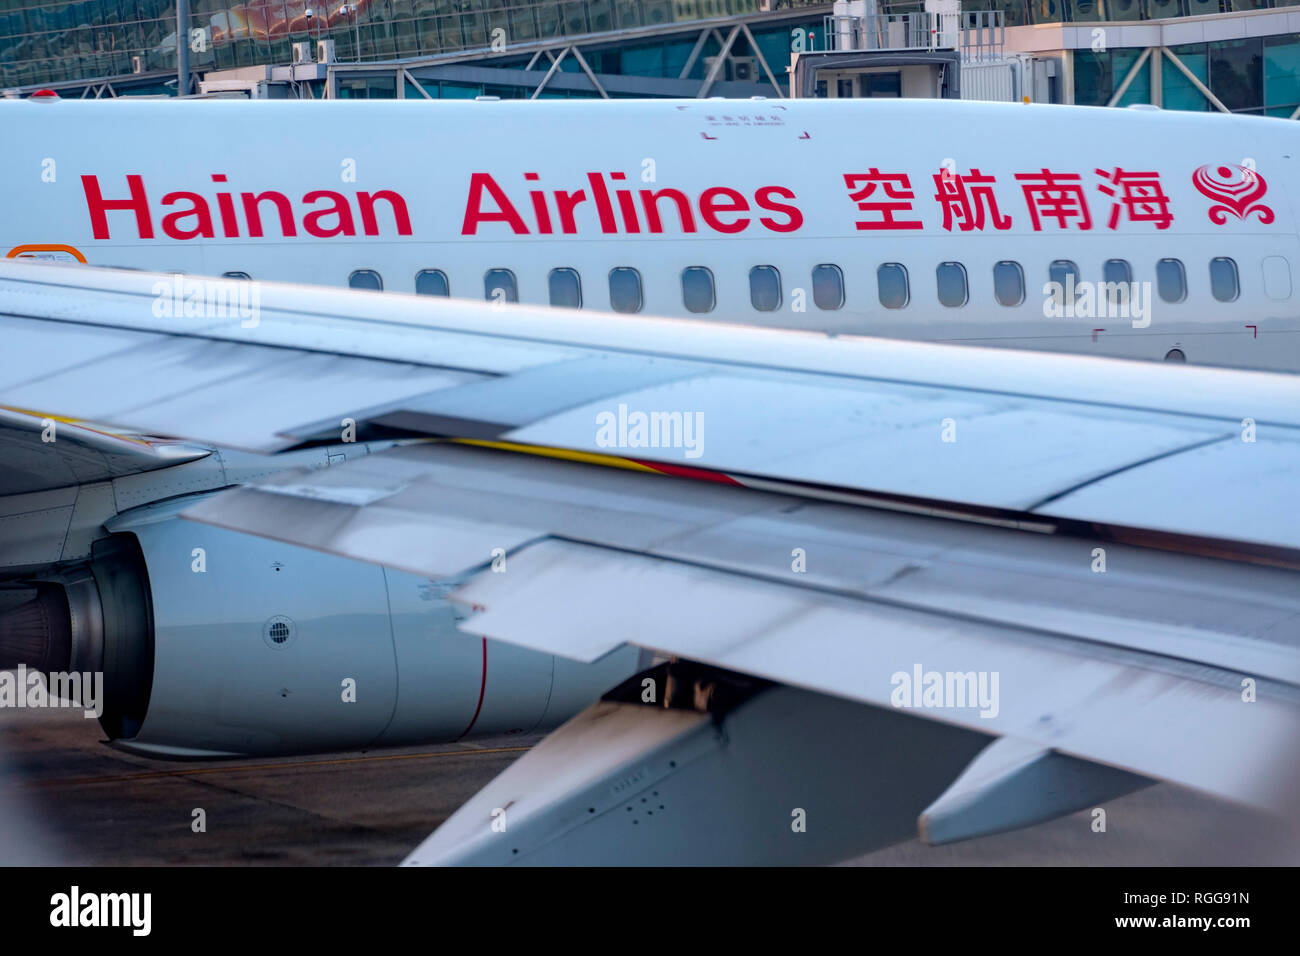 Hainan Airlines airplane Stock Photo